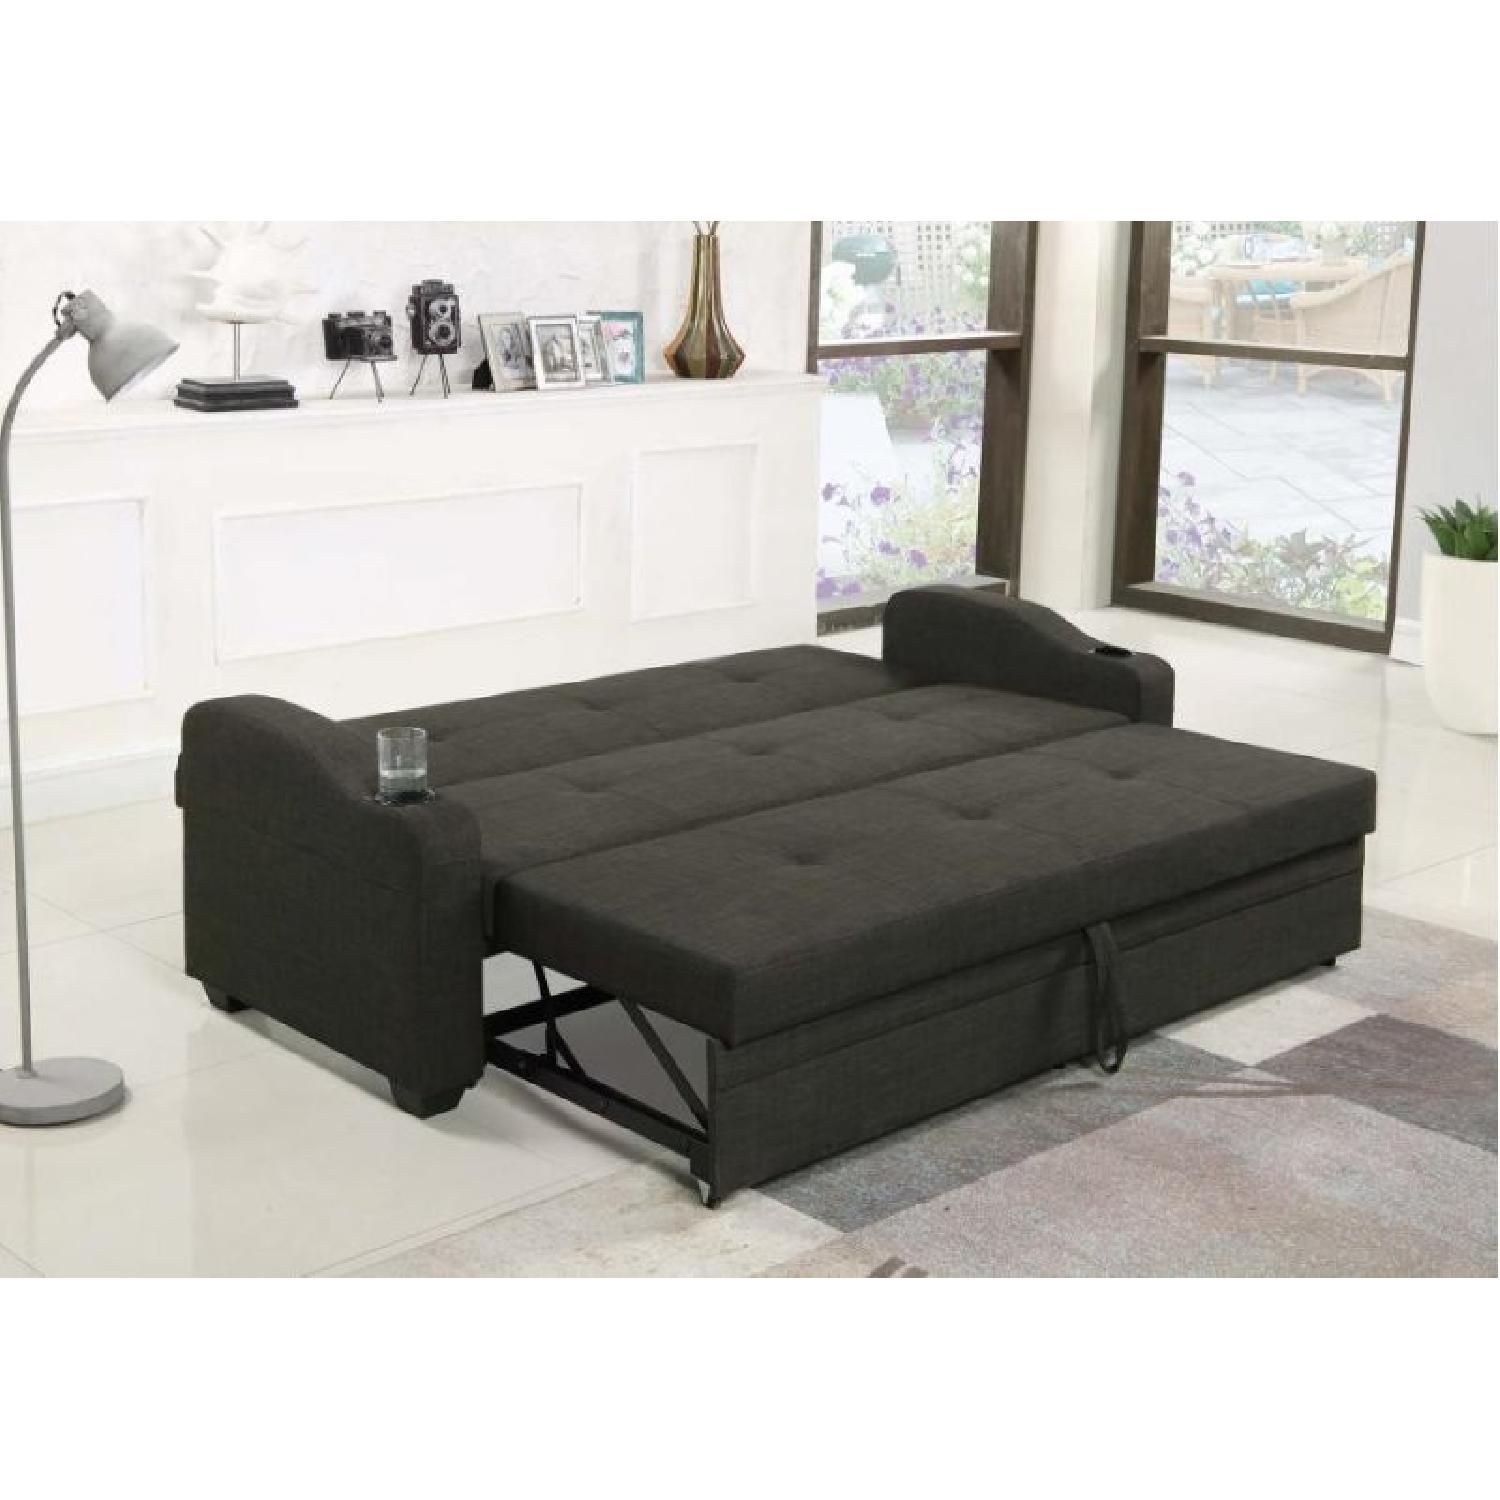 Charcoal Grey Pull Out Sleeper Sofa – Aptdeco Regarding 3 In 1 Gray Pull Out Sleeper Sofas (Gallery 14 of 20)